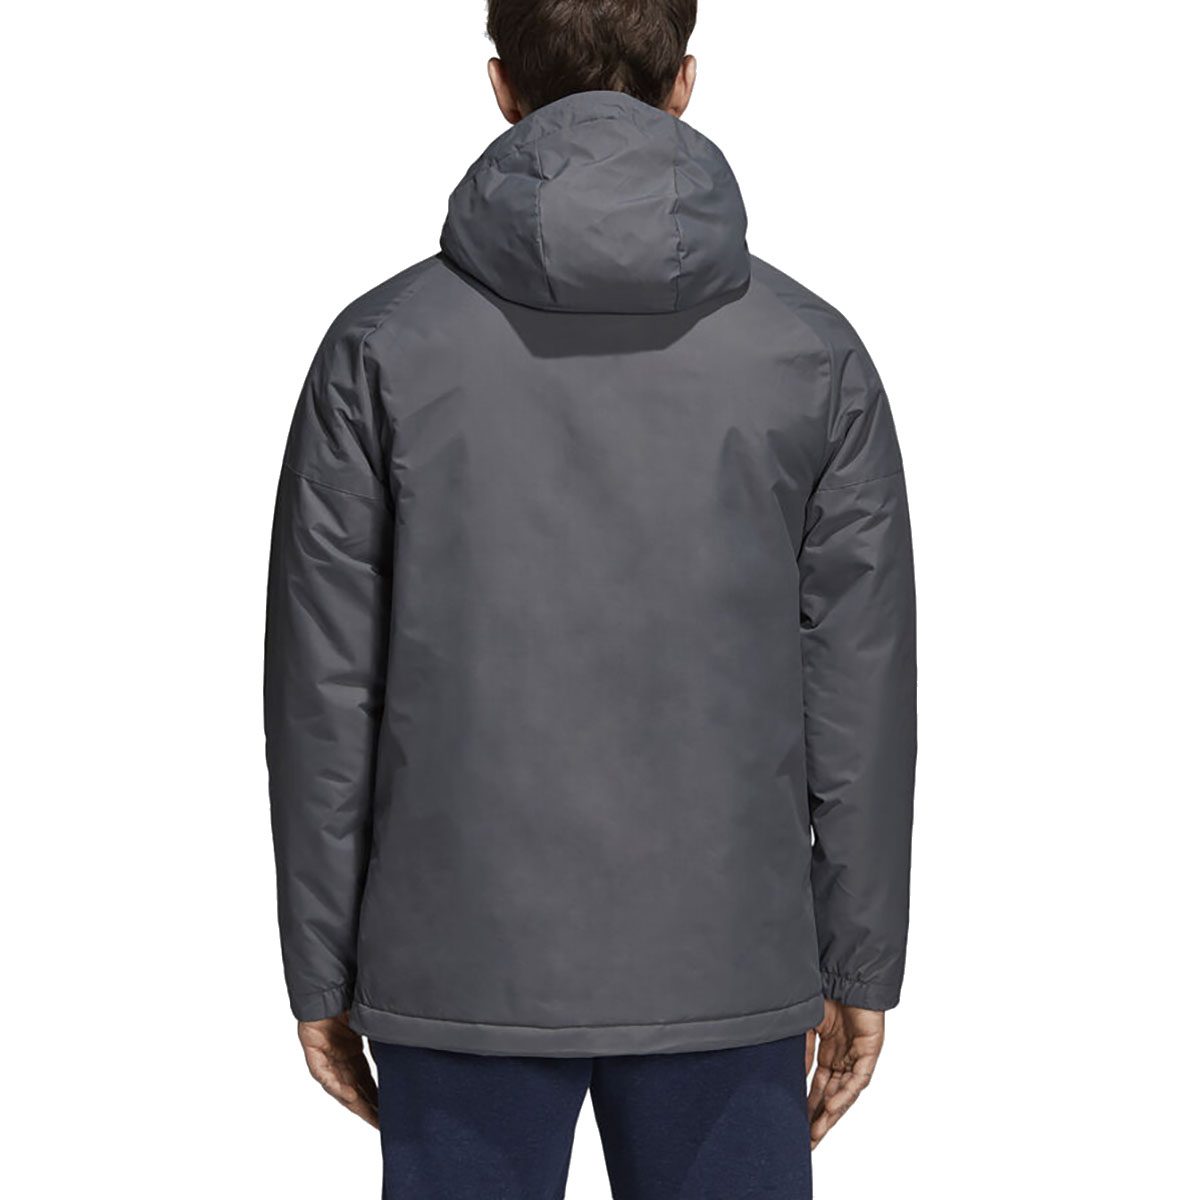 Adidas Men's Xploric 3-Stripes Grey Winter Jacket CY8641 - WOOKI.COM